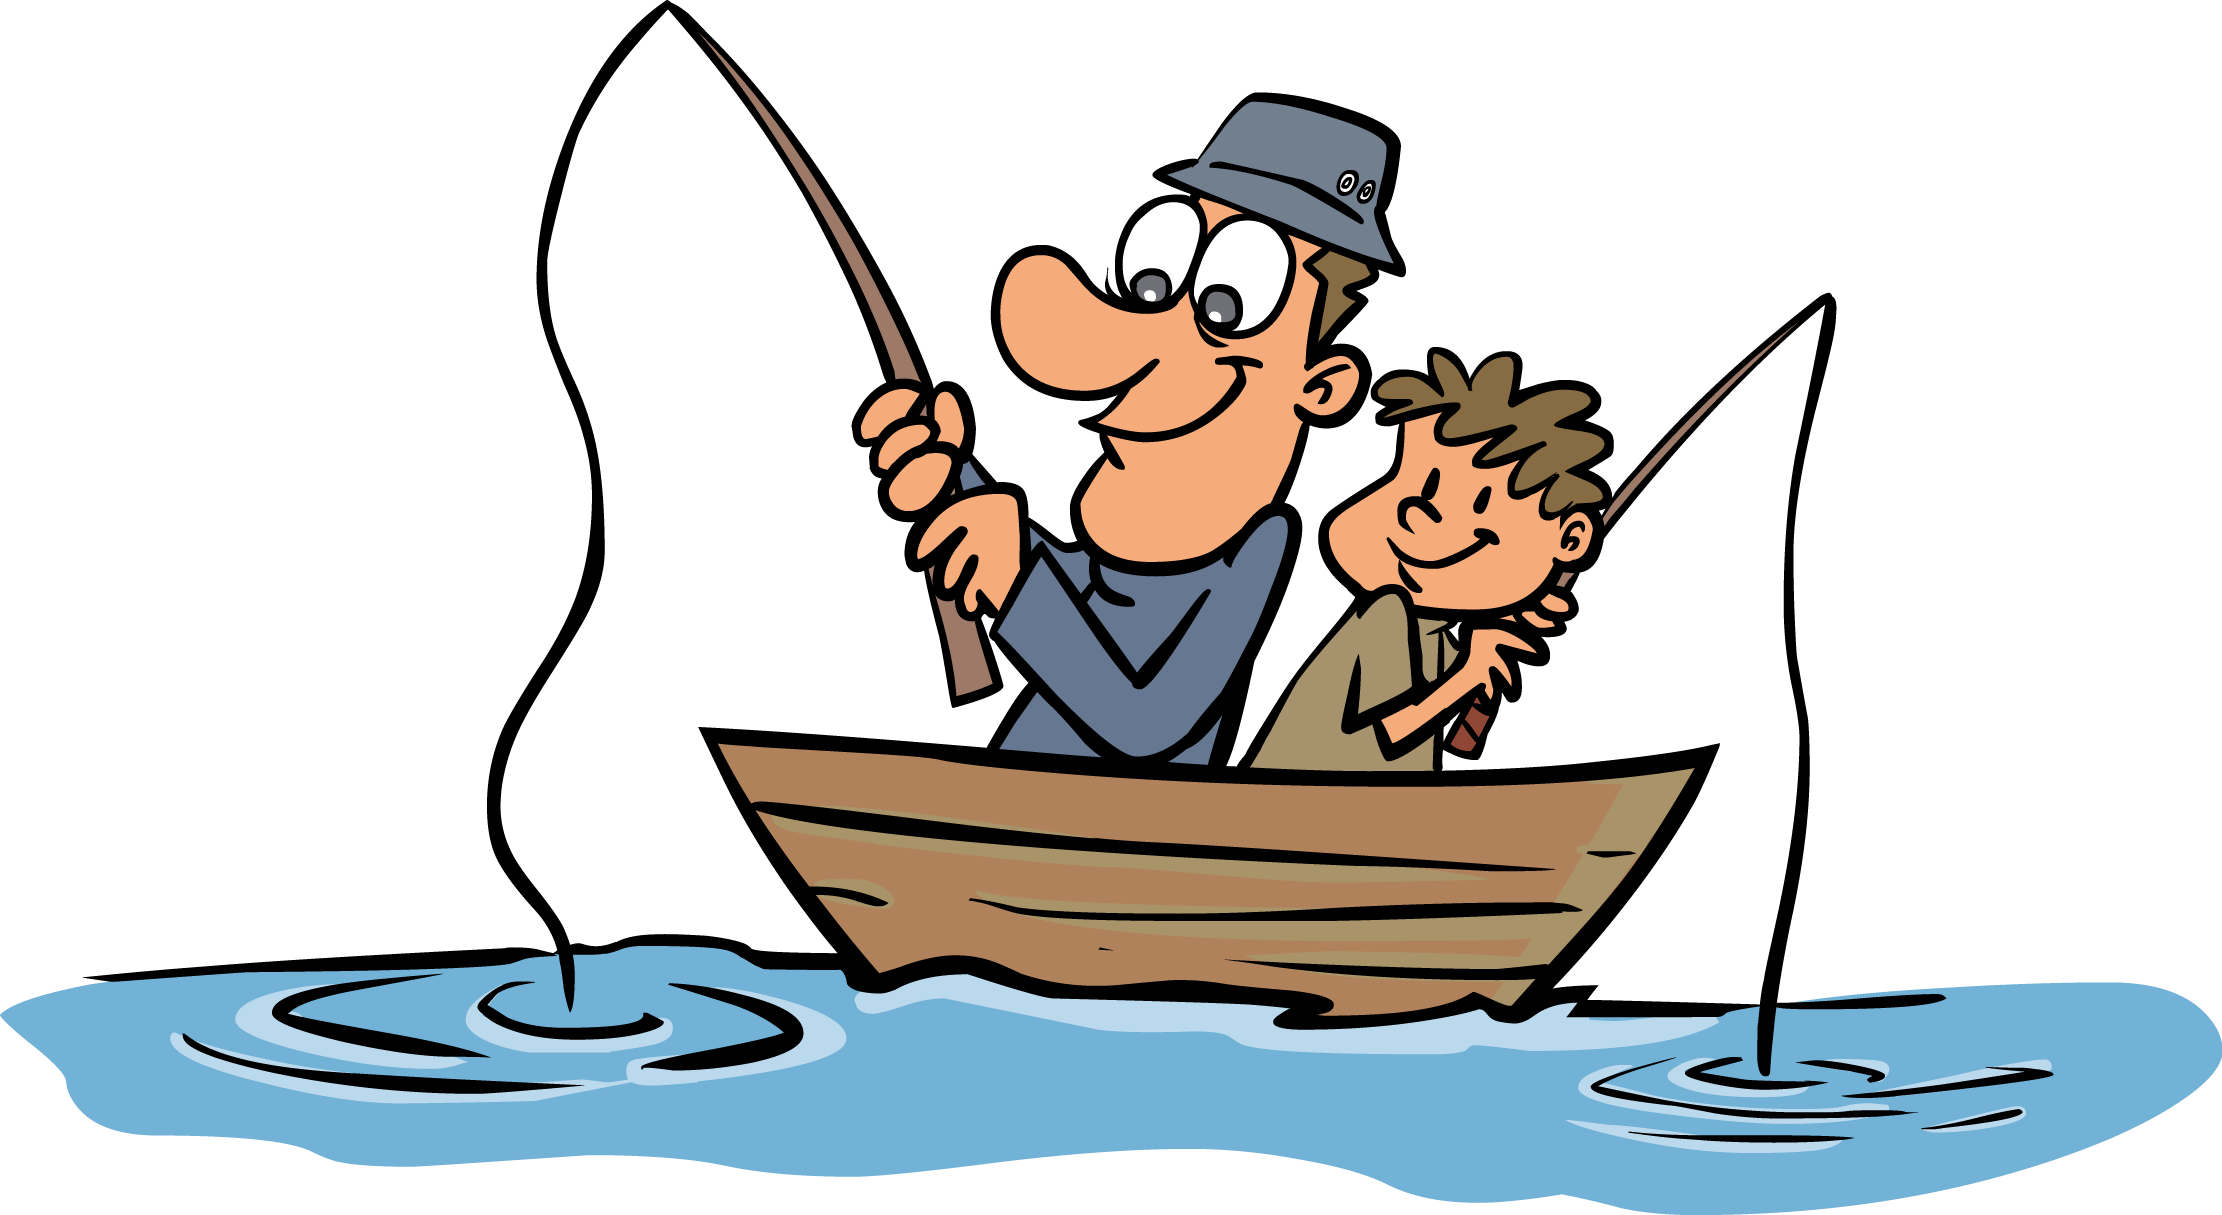 Fishing Cartoon PNG HD Isolated